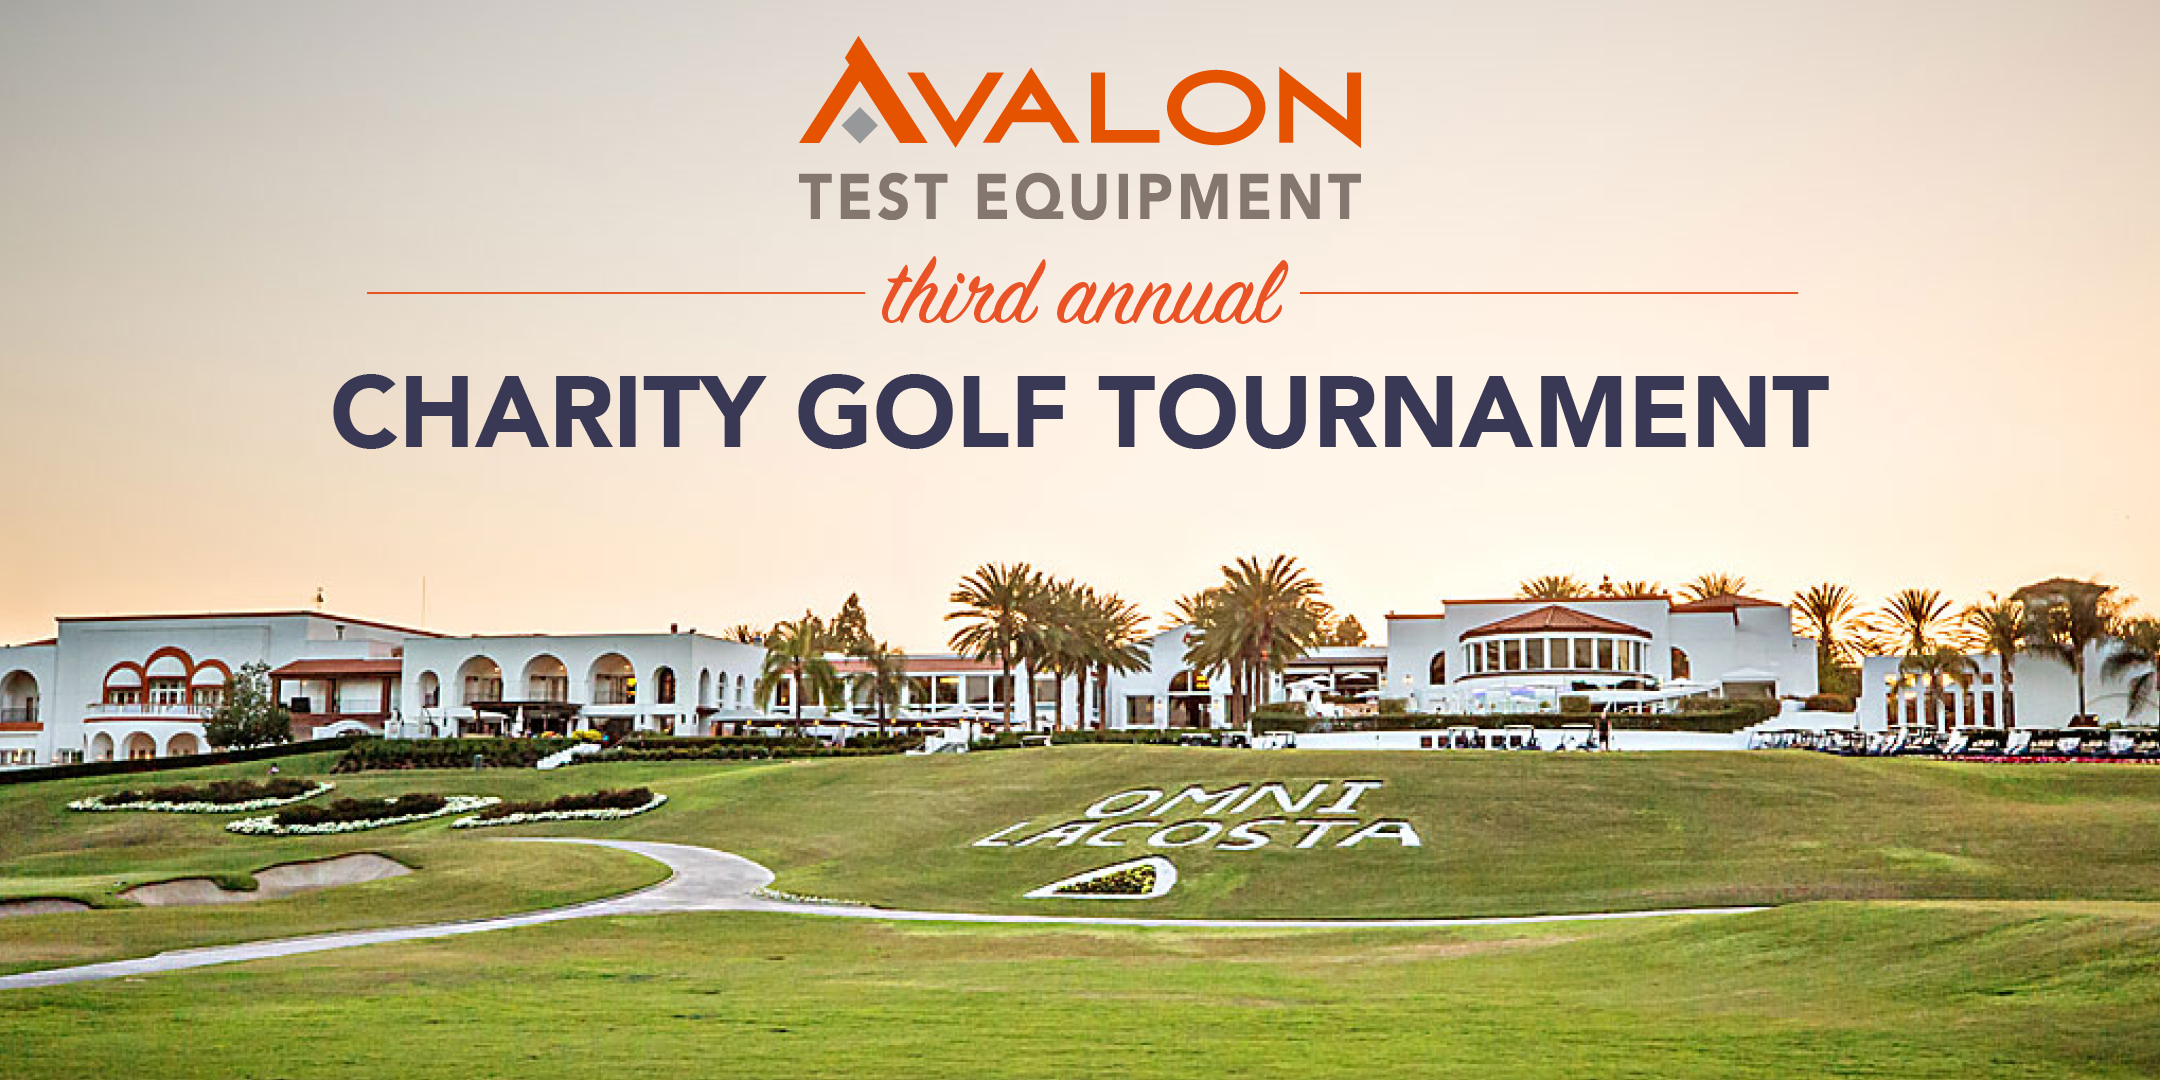 Avalon Test Equipment's Third Annual Charity Golf Tournament